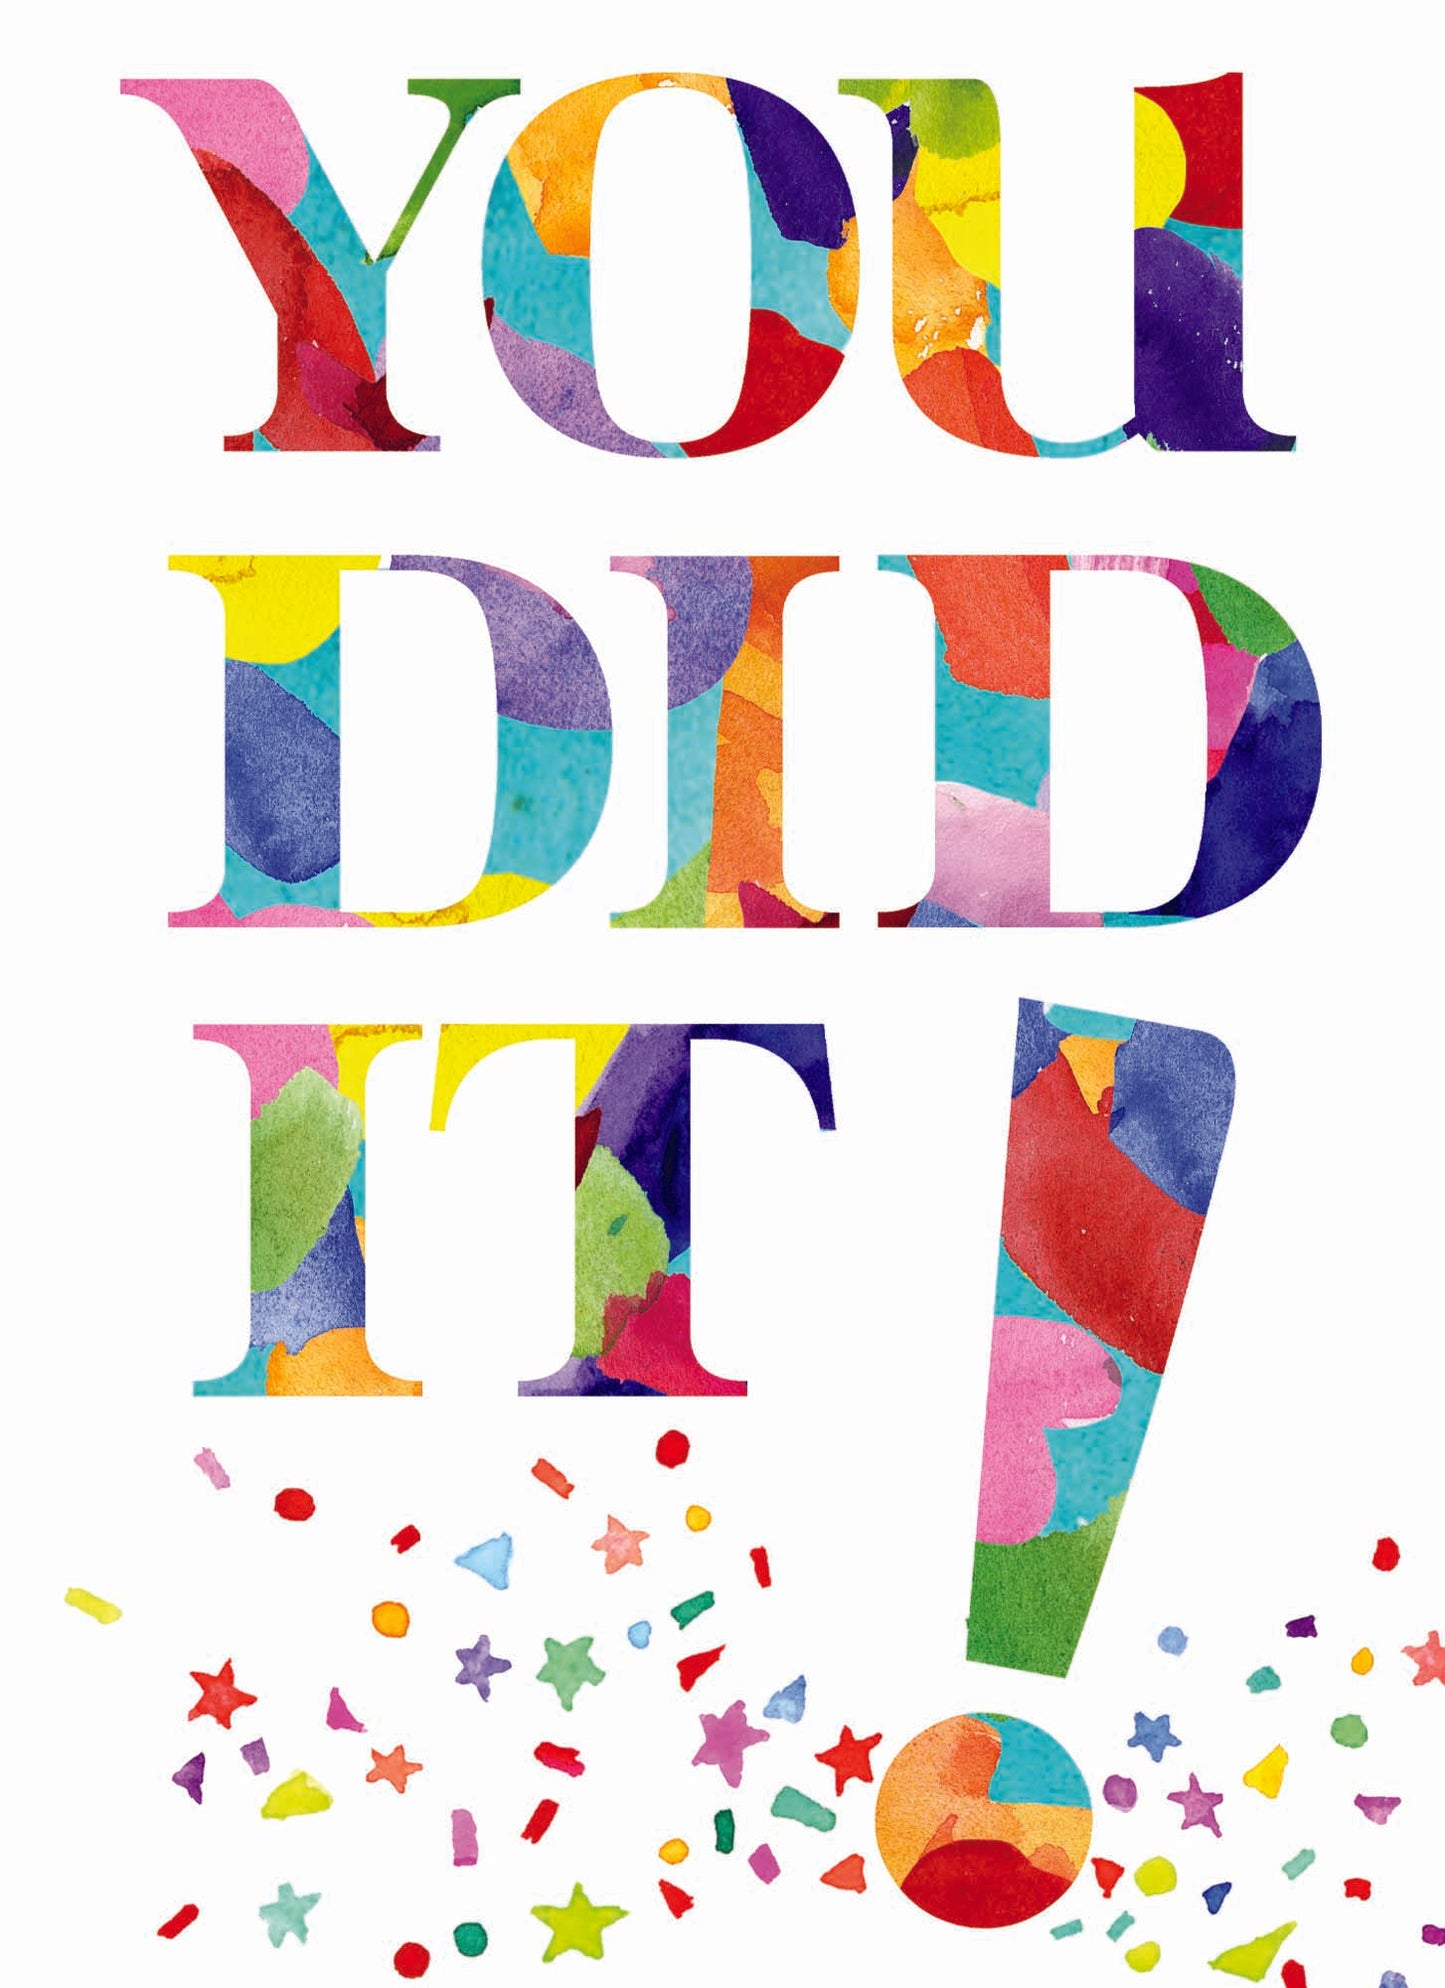 Congratulations - You Did It!